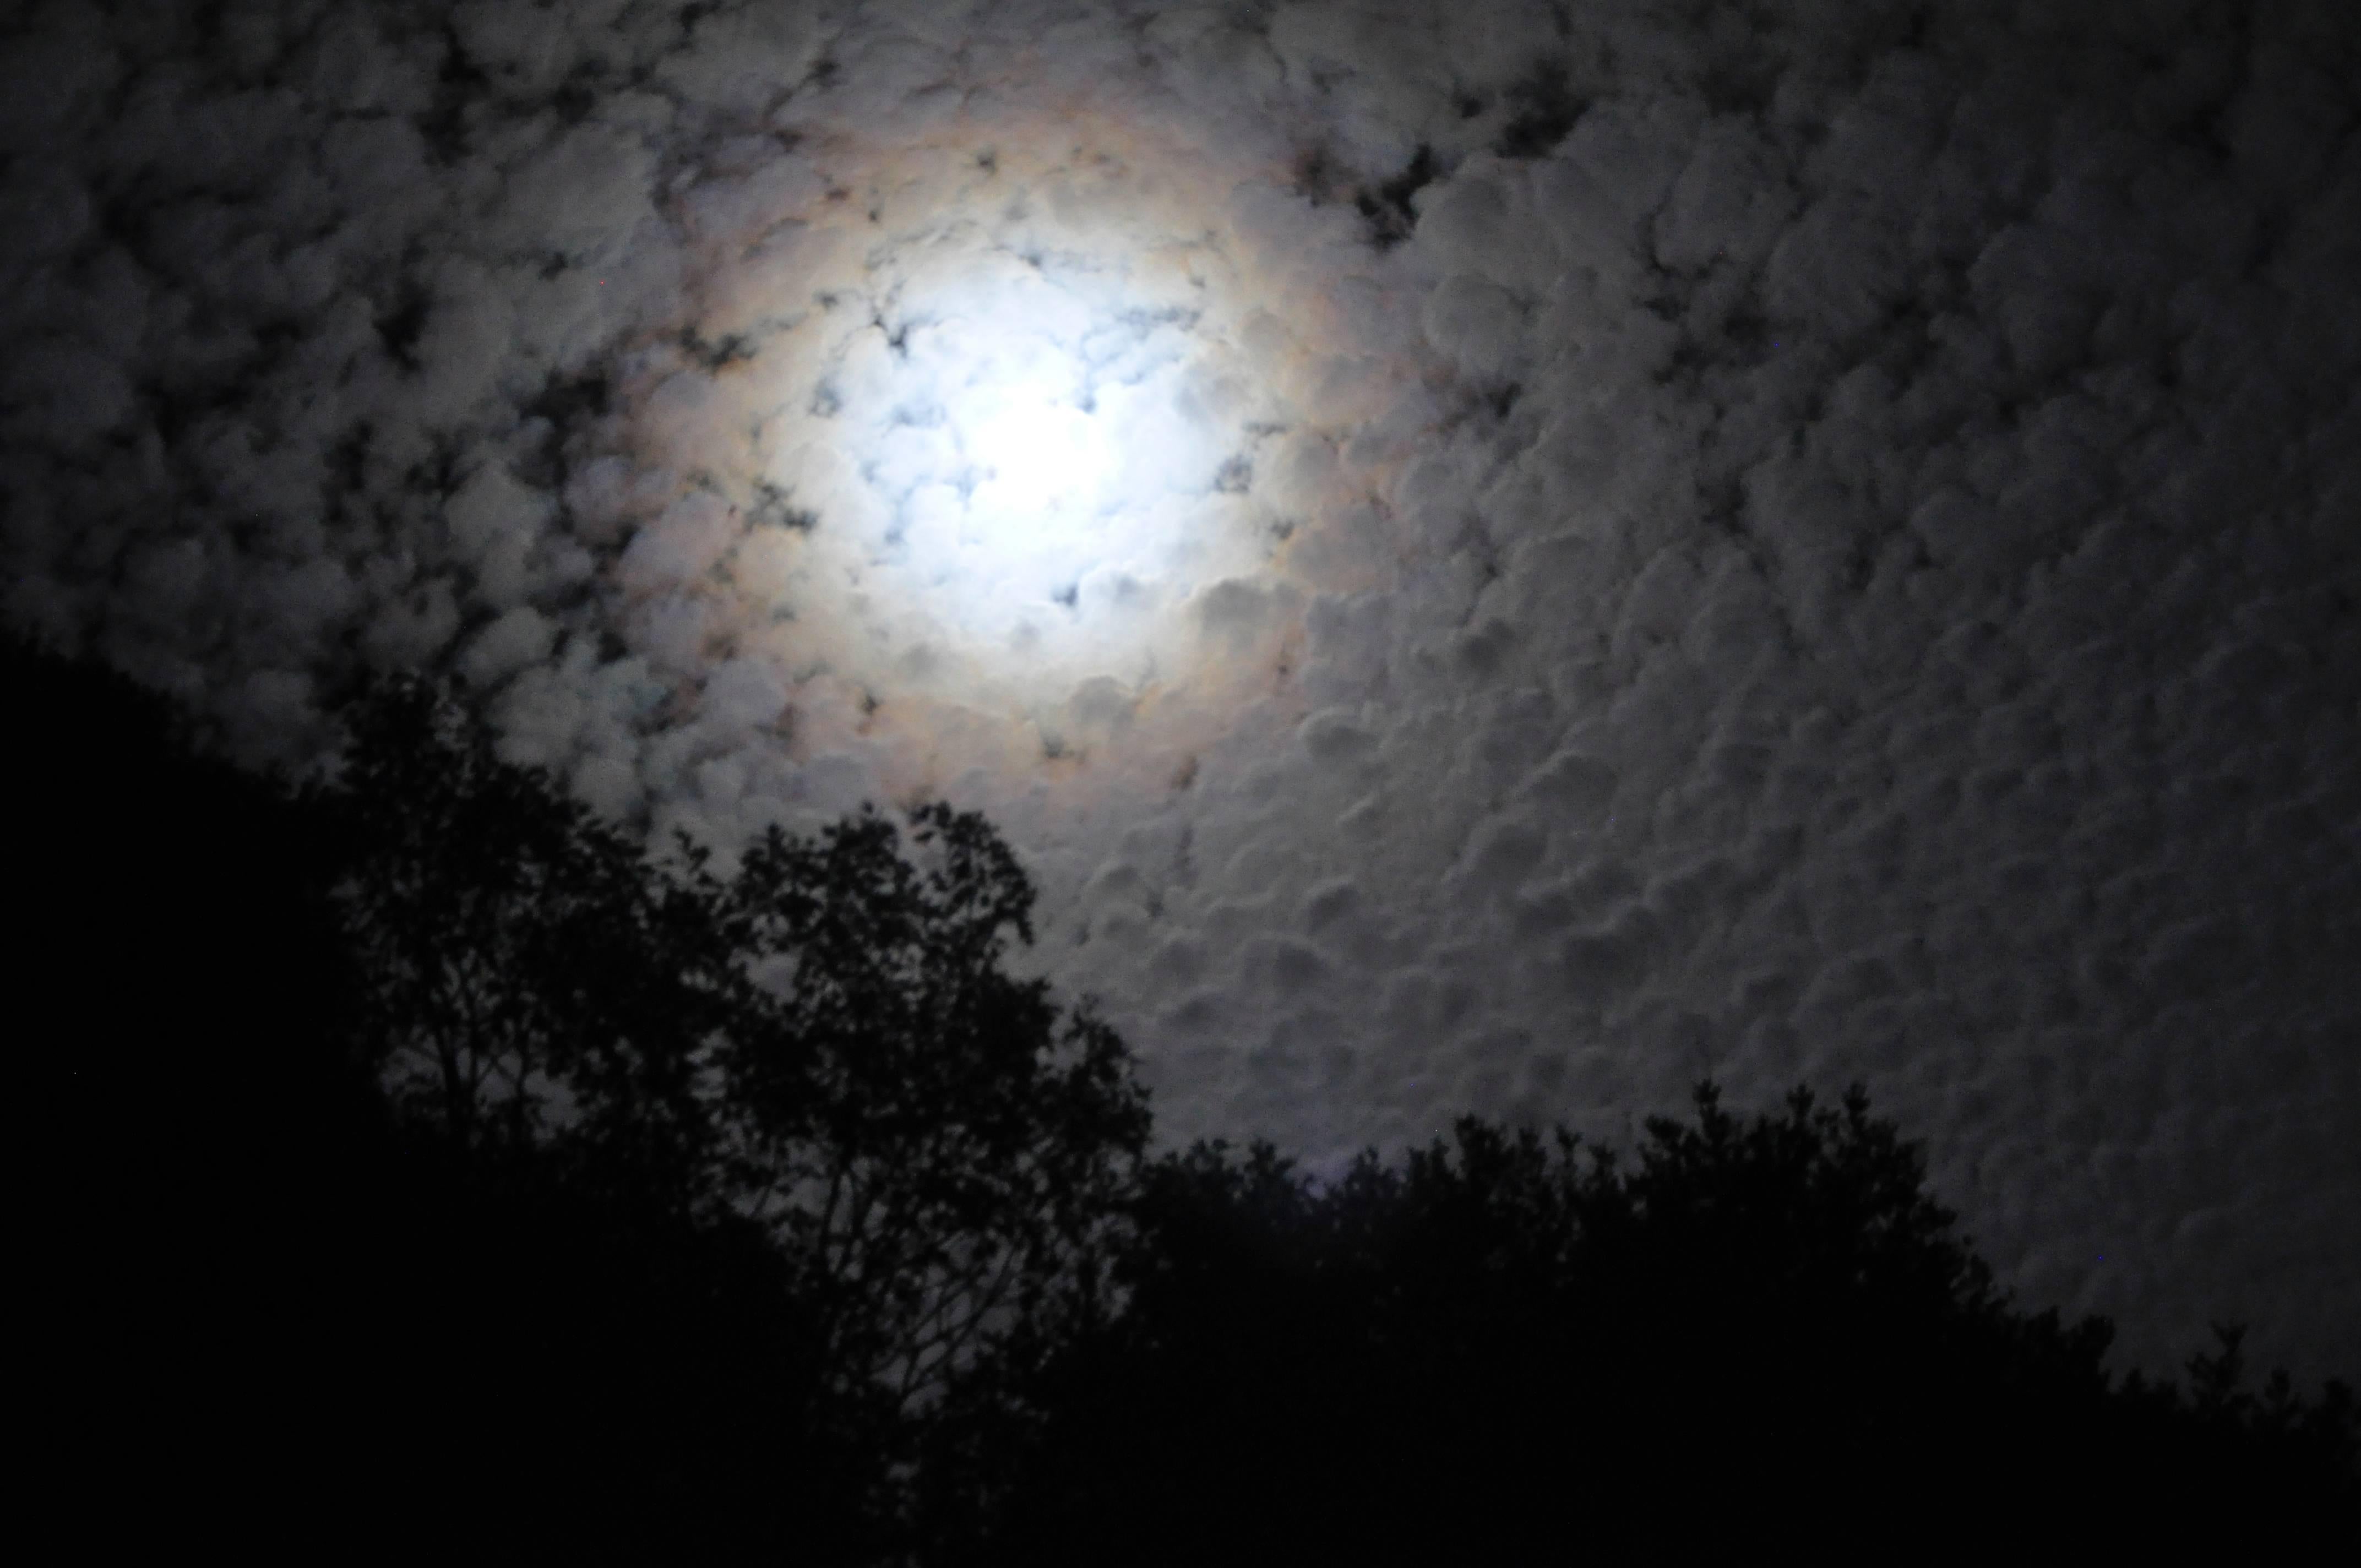 Gaétan Caron Landscape Photograph - "Clair de Lune (Moonlight)" Mendocino, CA Photograph, 2012